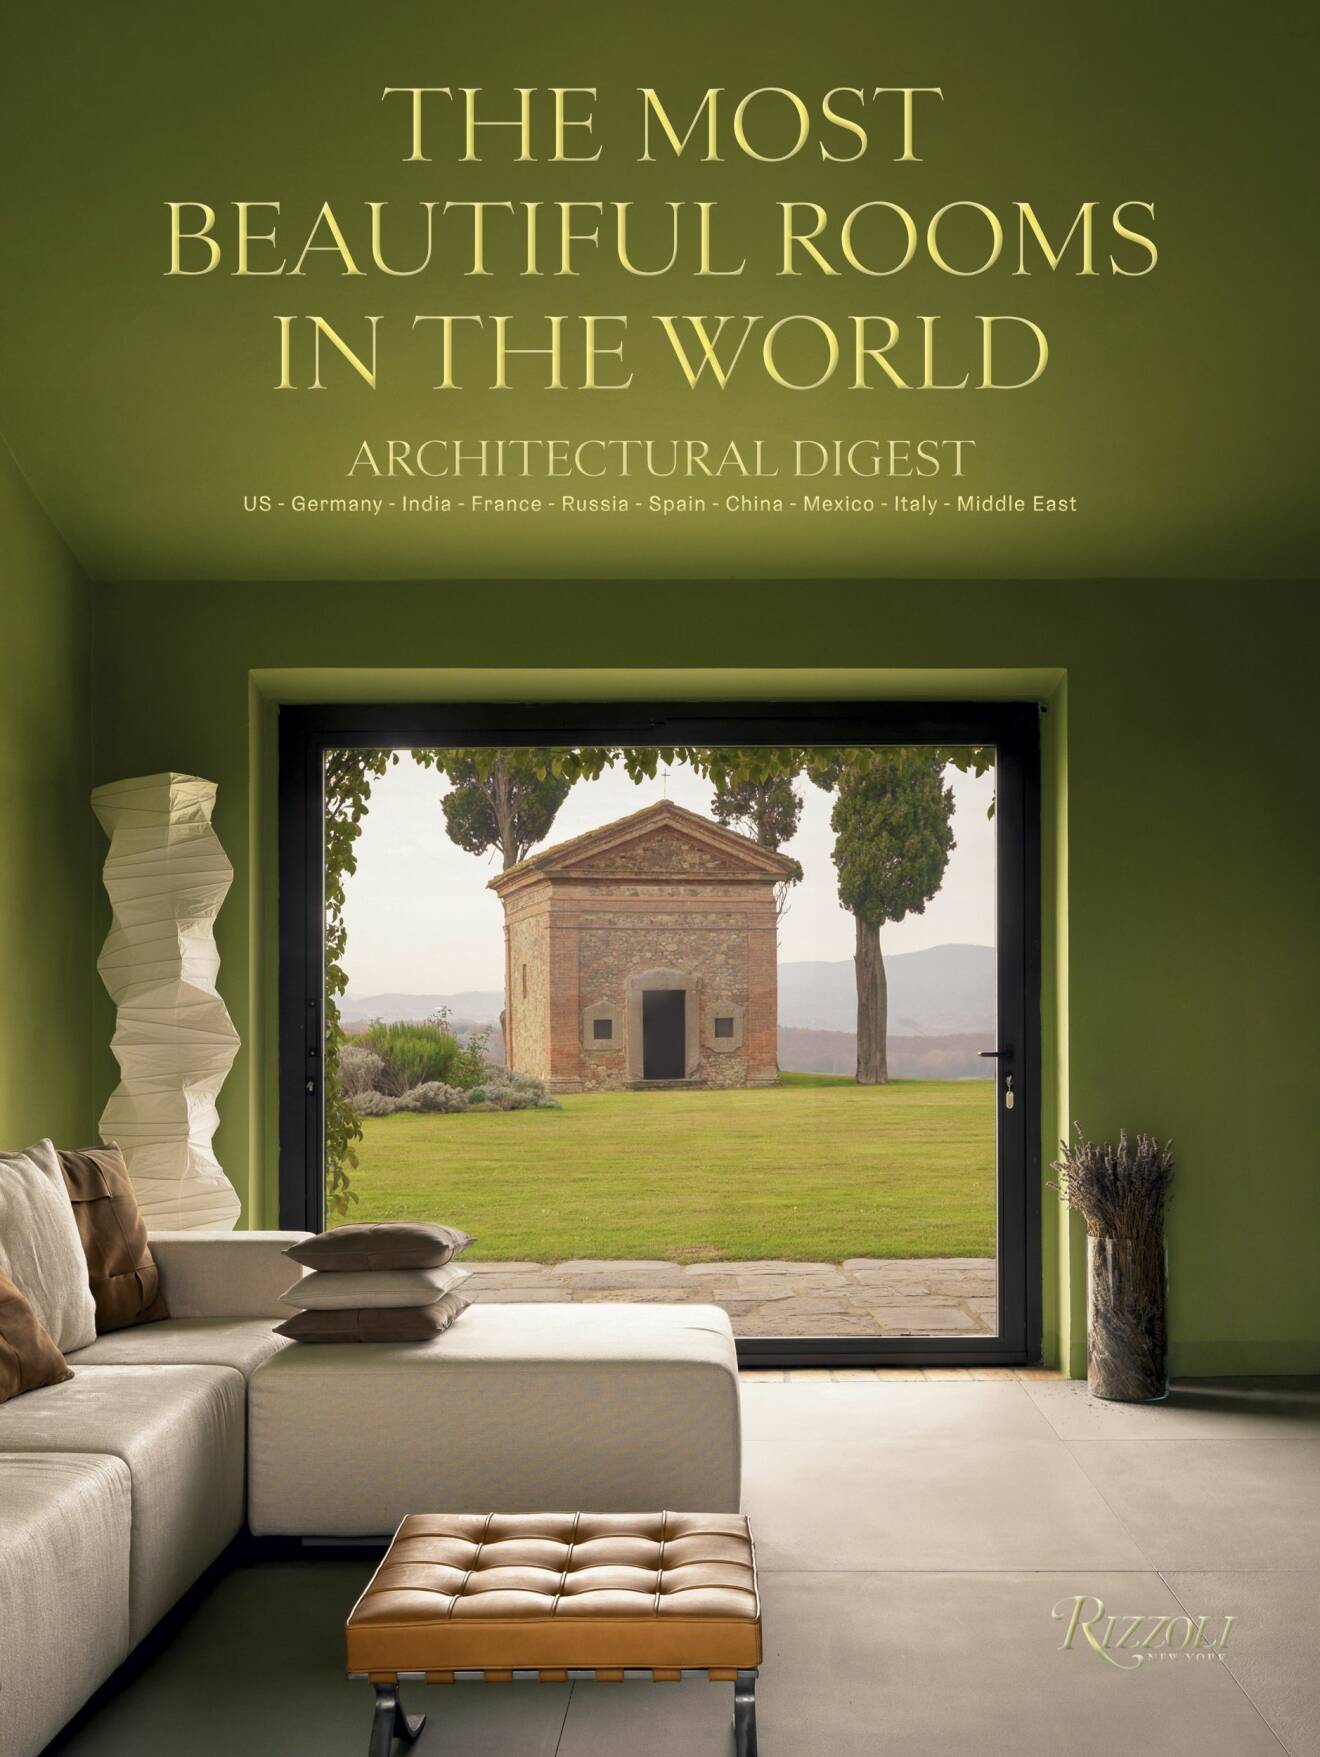 Architectural digest av Marie Kalt - inspirerande coffee table-bok